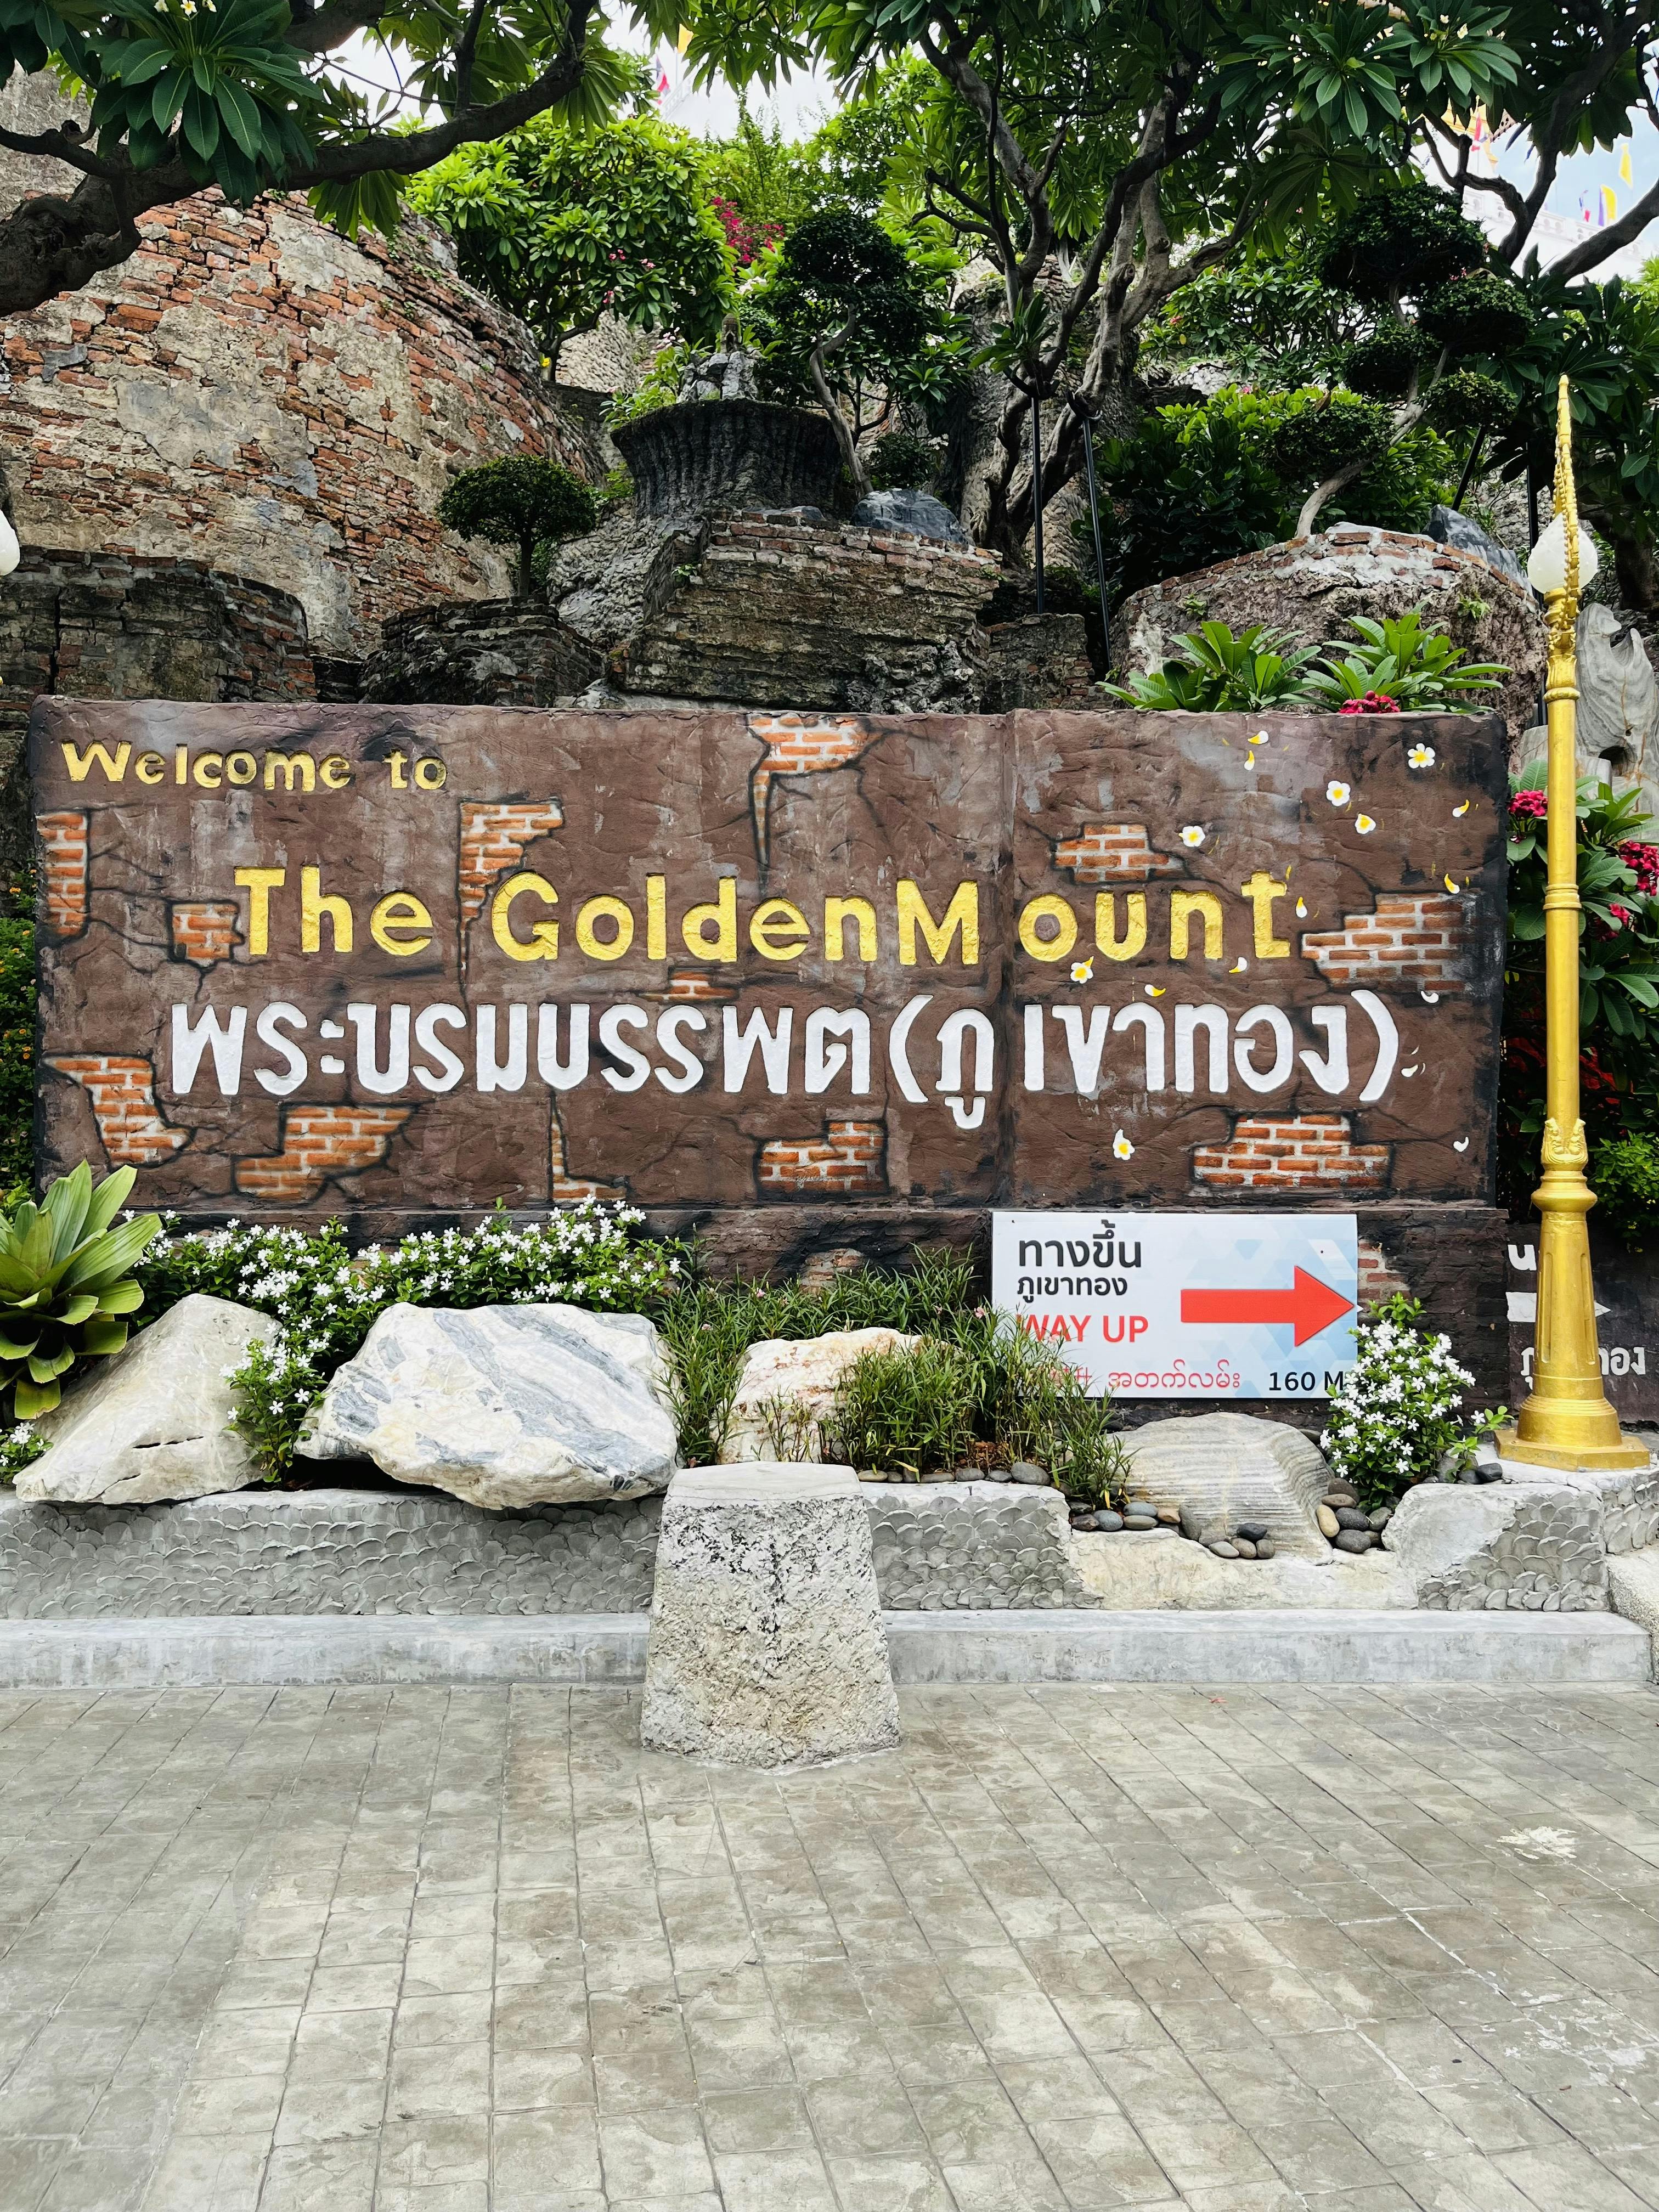 Entry of The Golden Mount (Wat Saket)